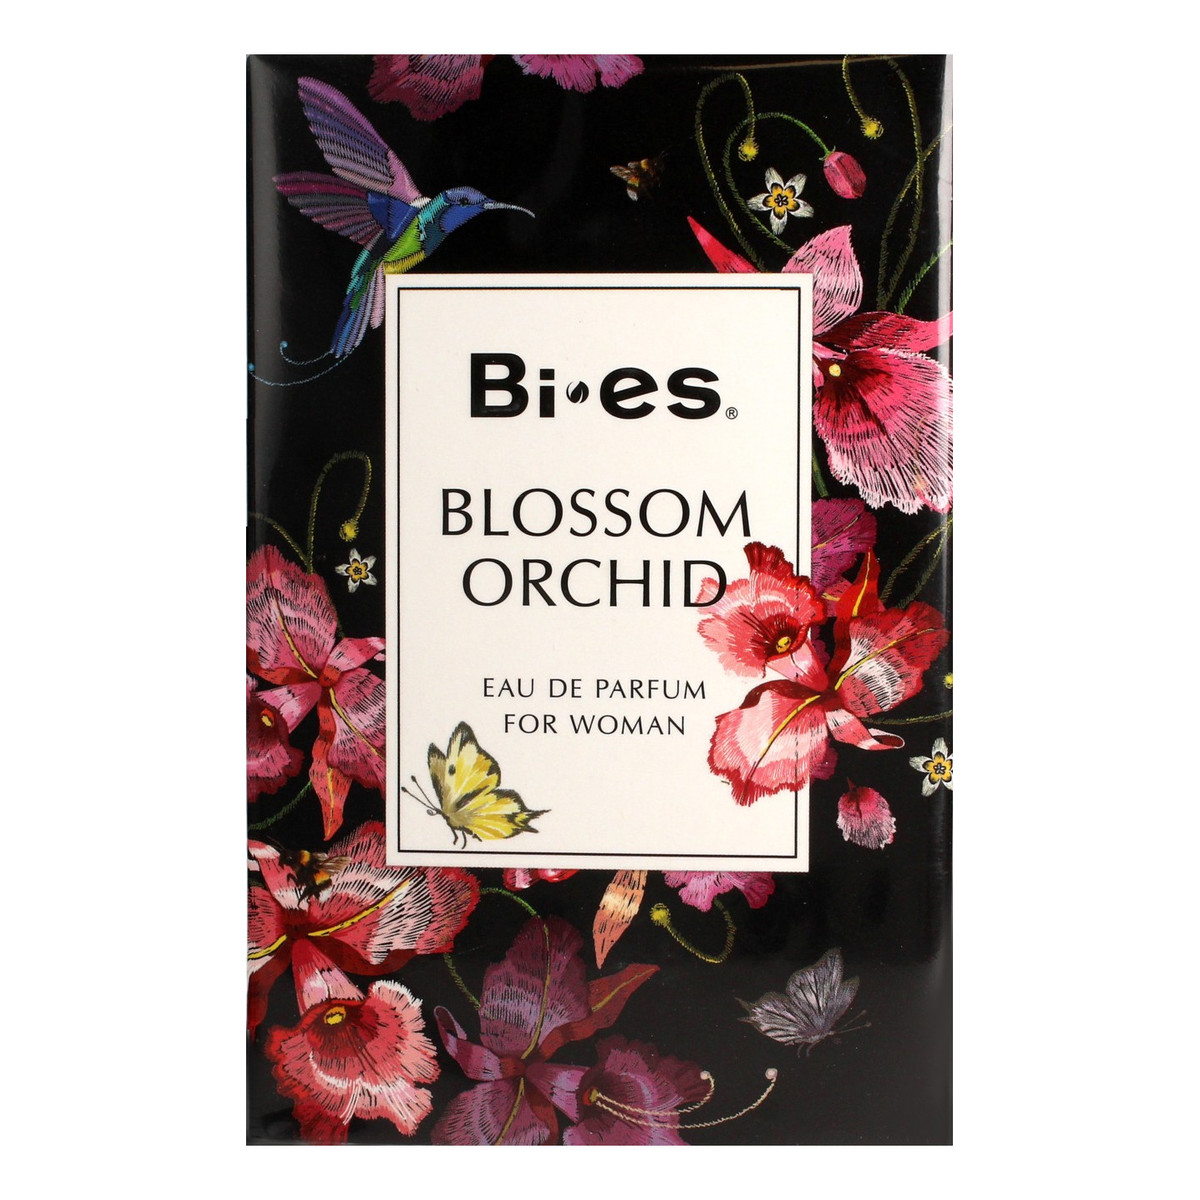 Bi-es Blossom Orchid Woda perfumowana 100ml